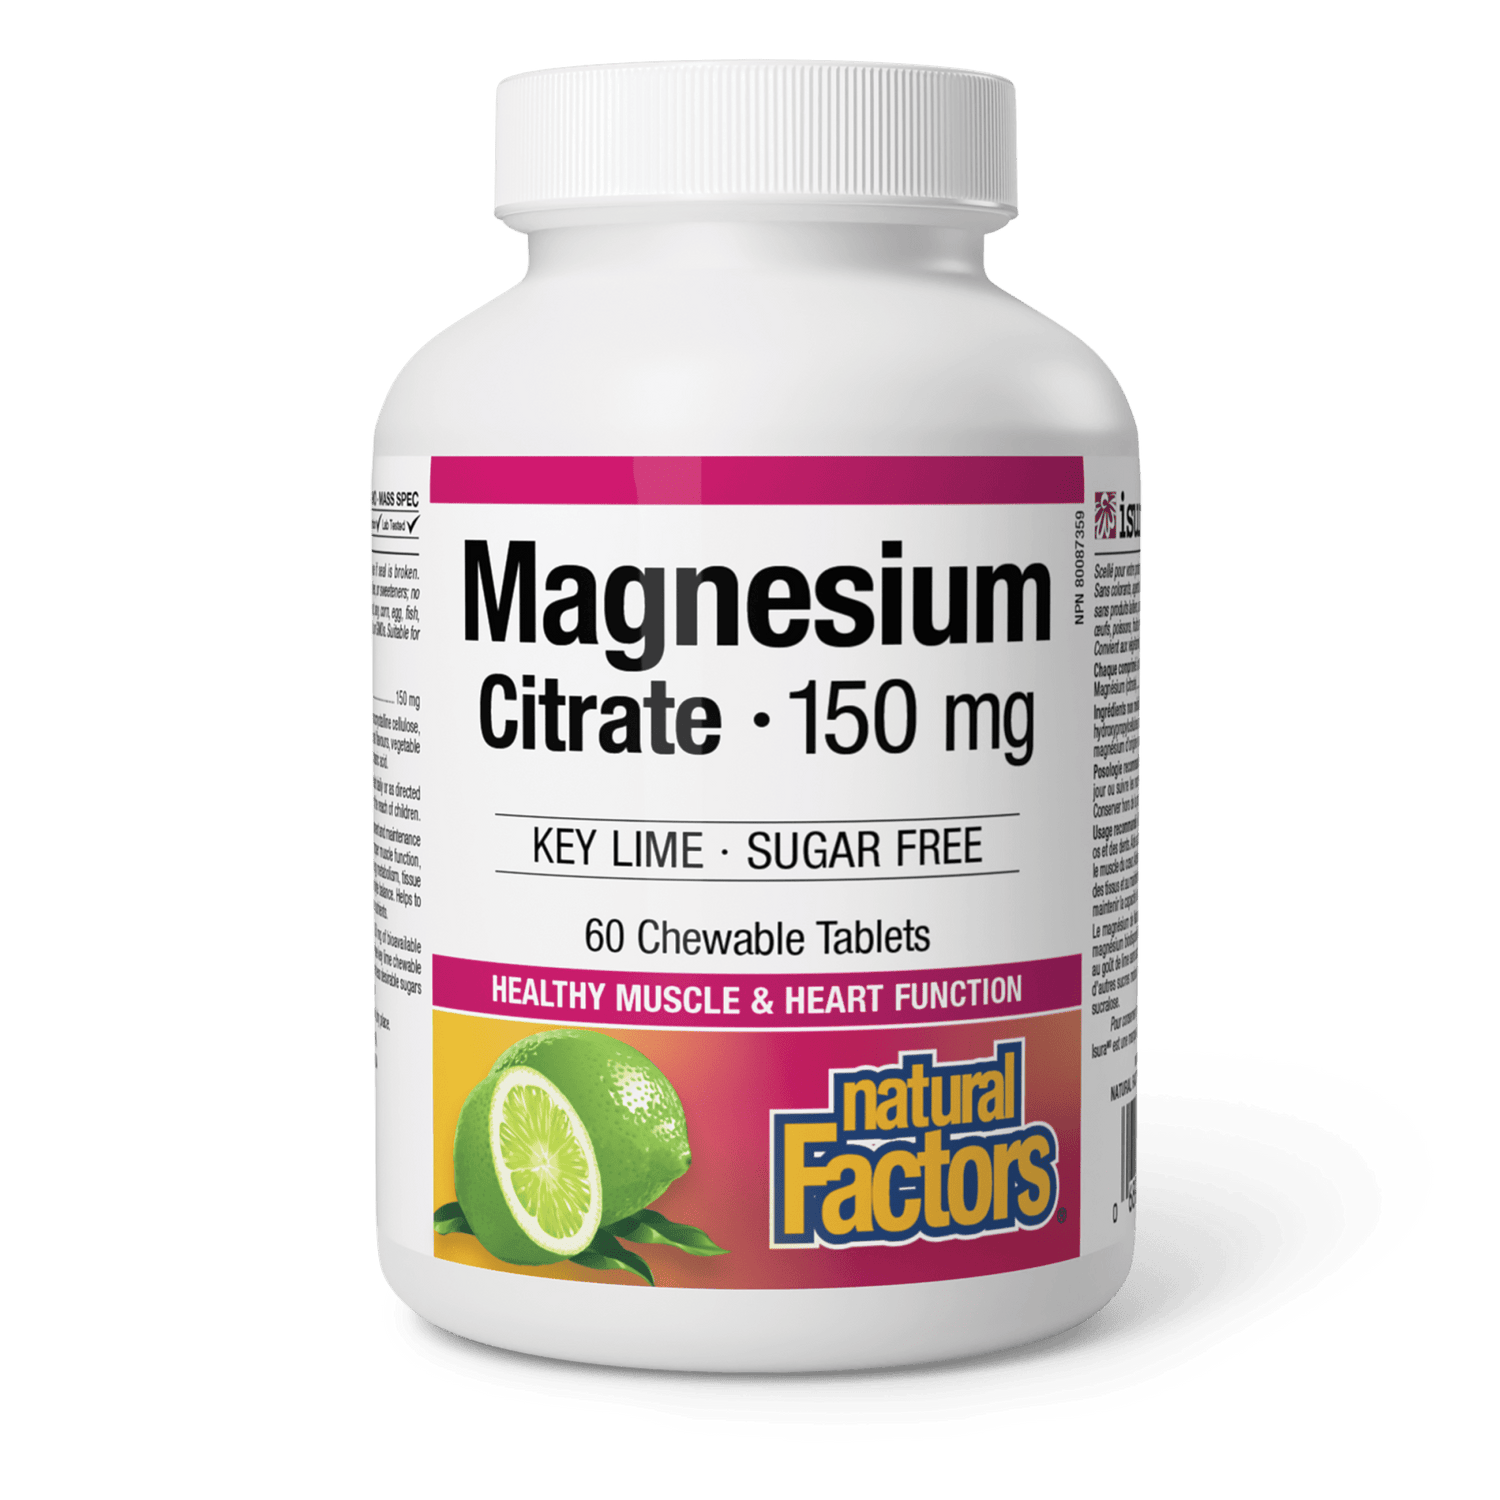 Magnesium Citrate 150 mg, Key Lime, Natural Factors|v|image|1650